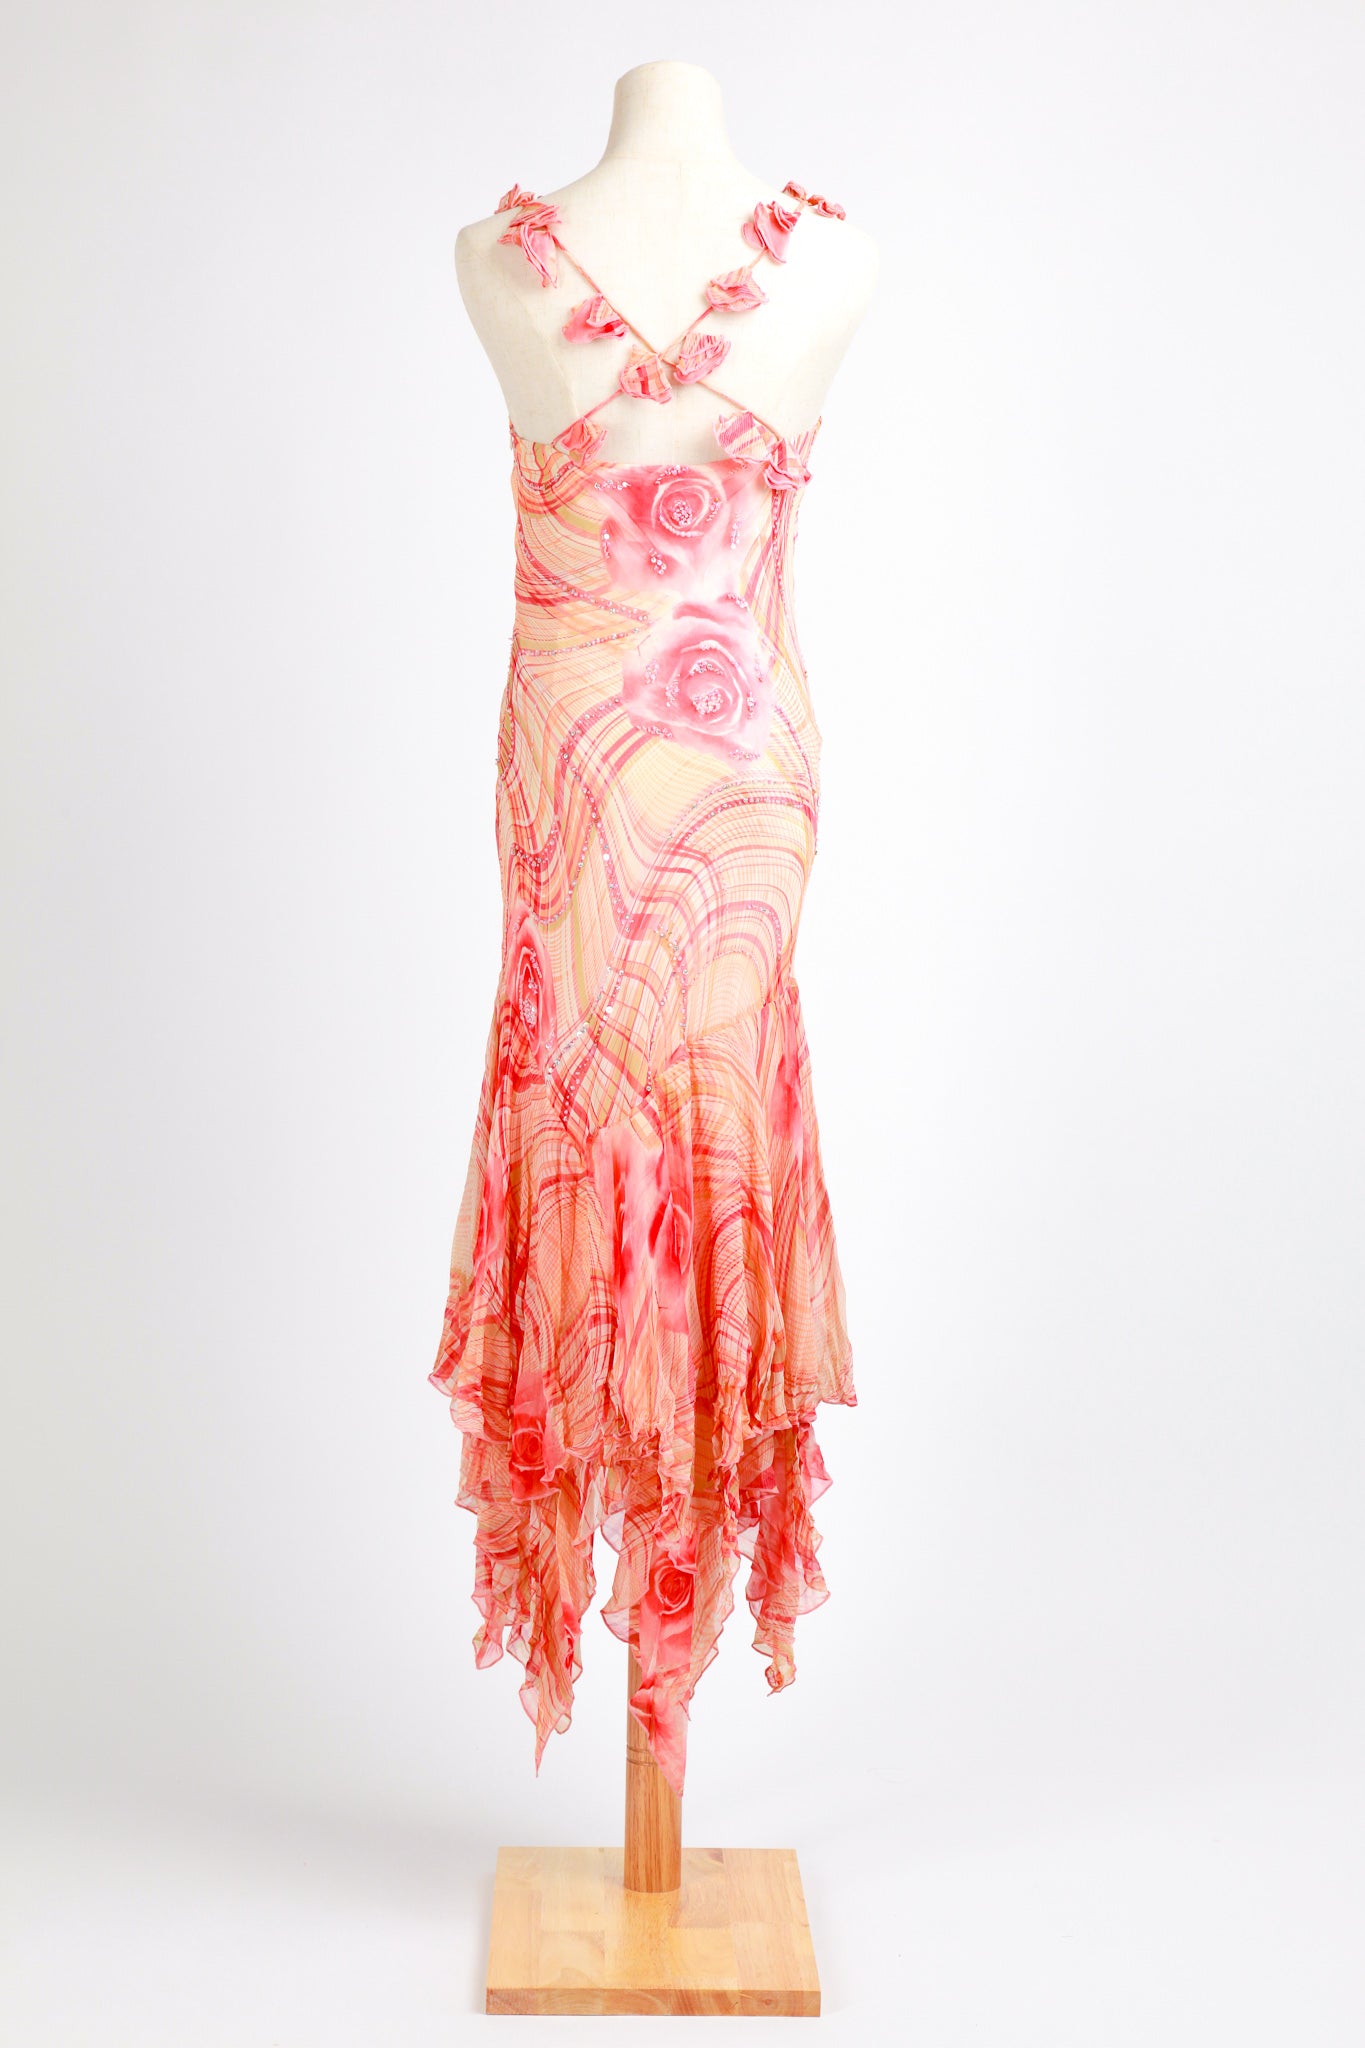 Diane Freis - Whimsical Garden Orange Pink Roses Dress